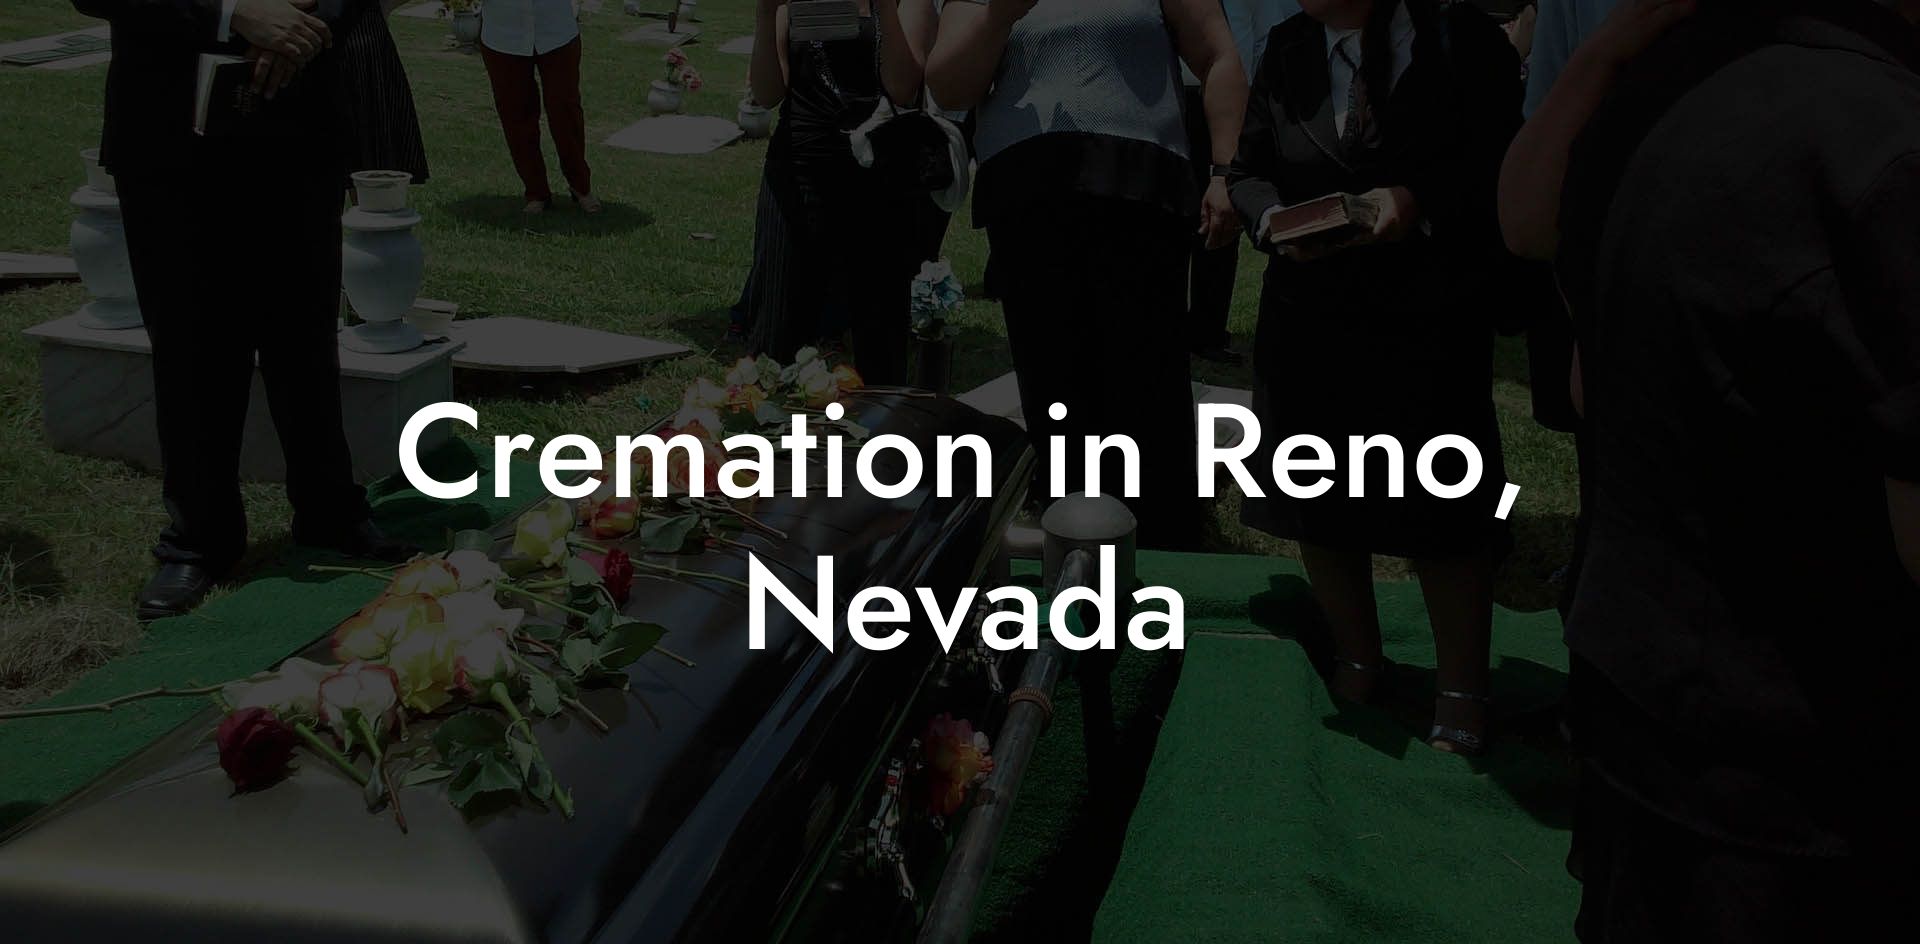 Cremation in Reno, Nevada